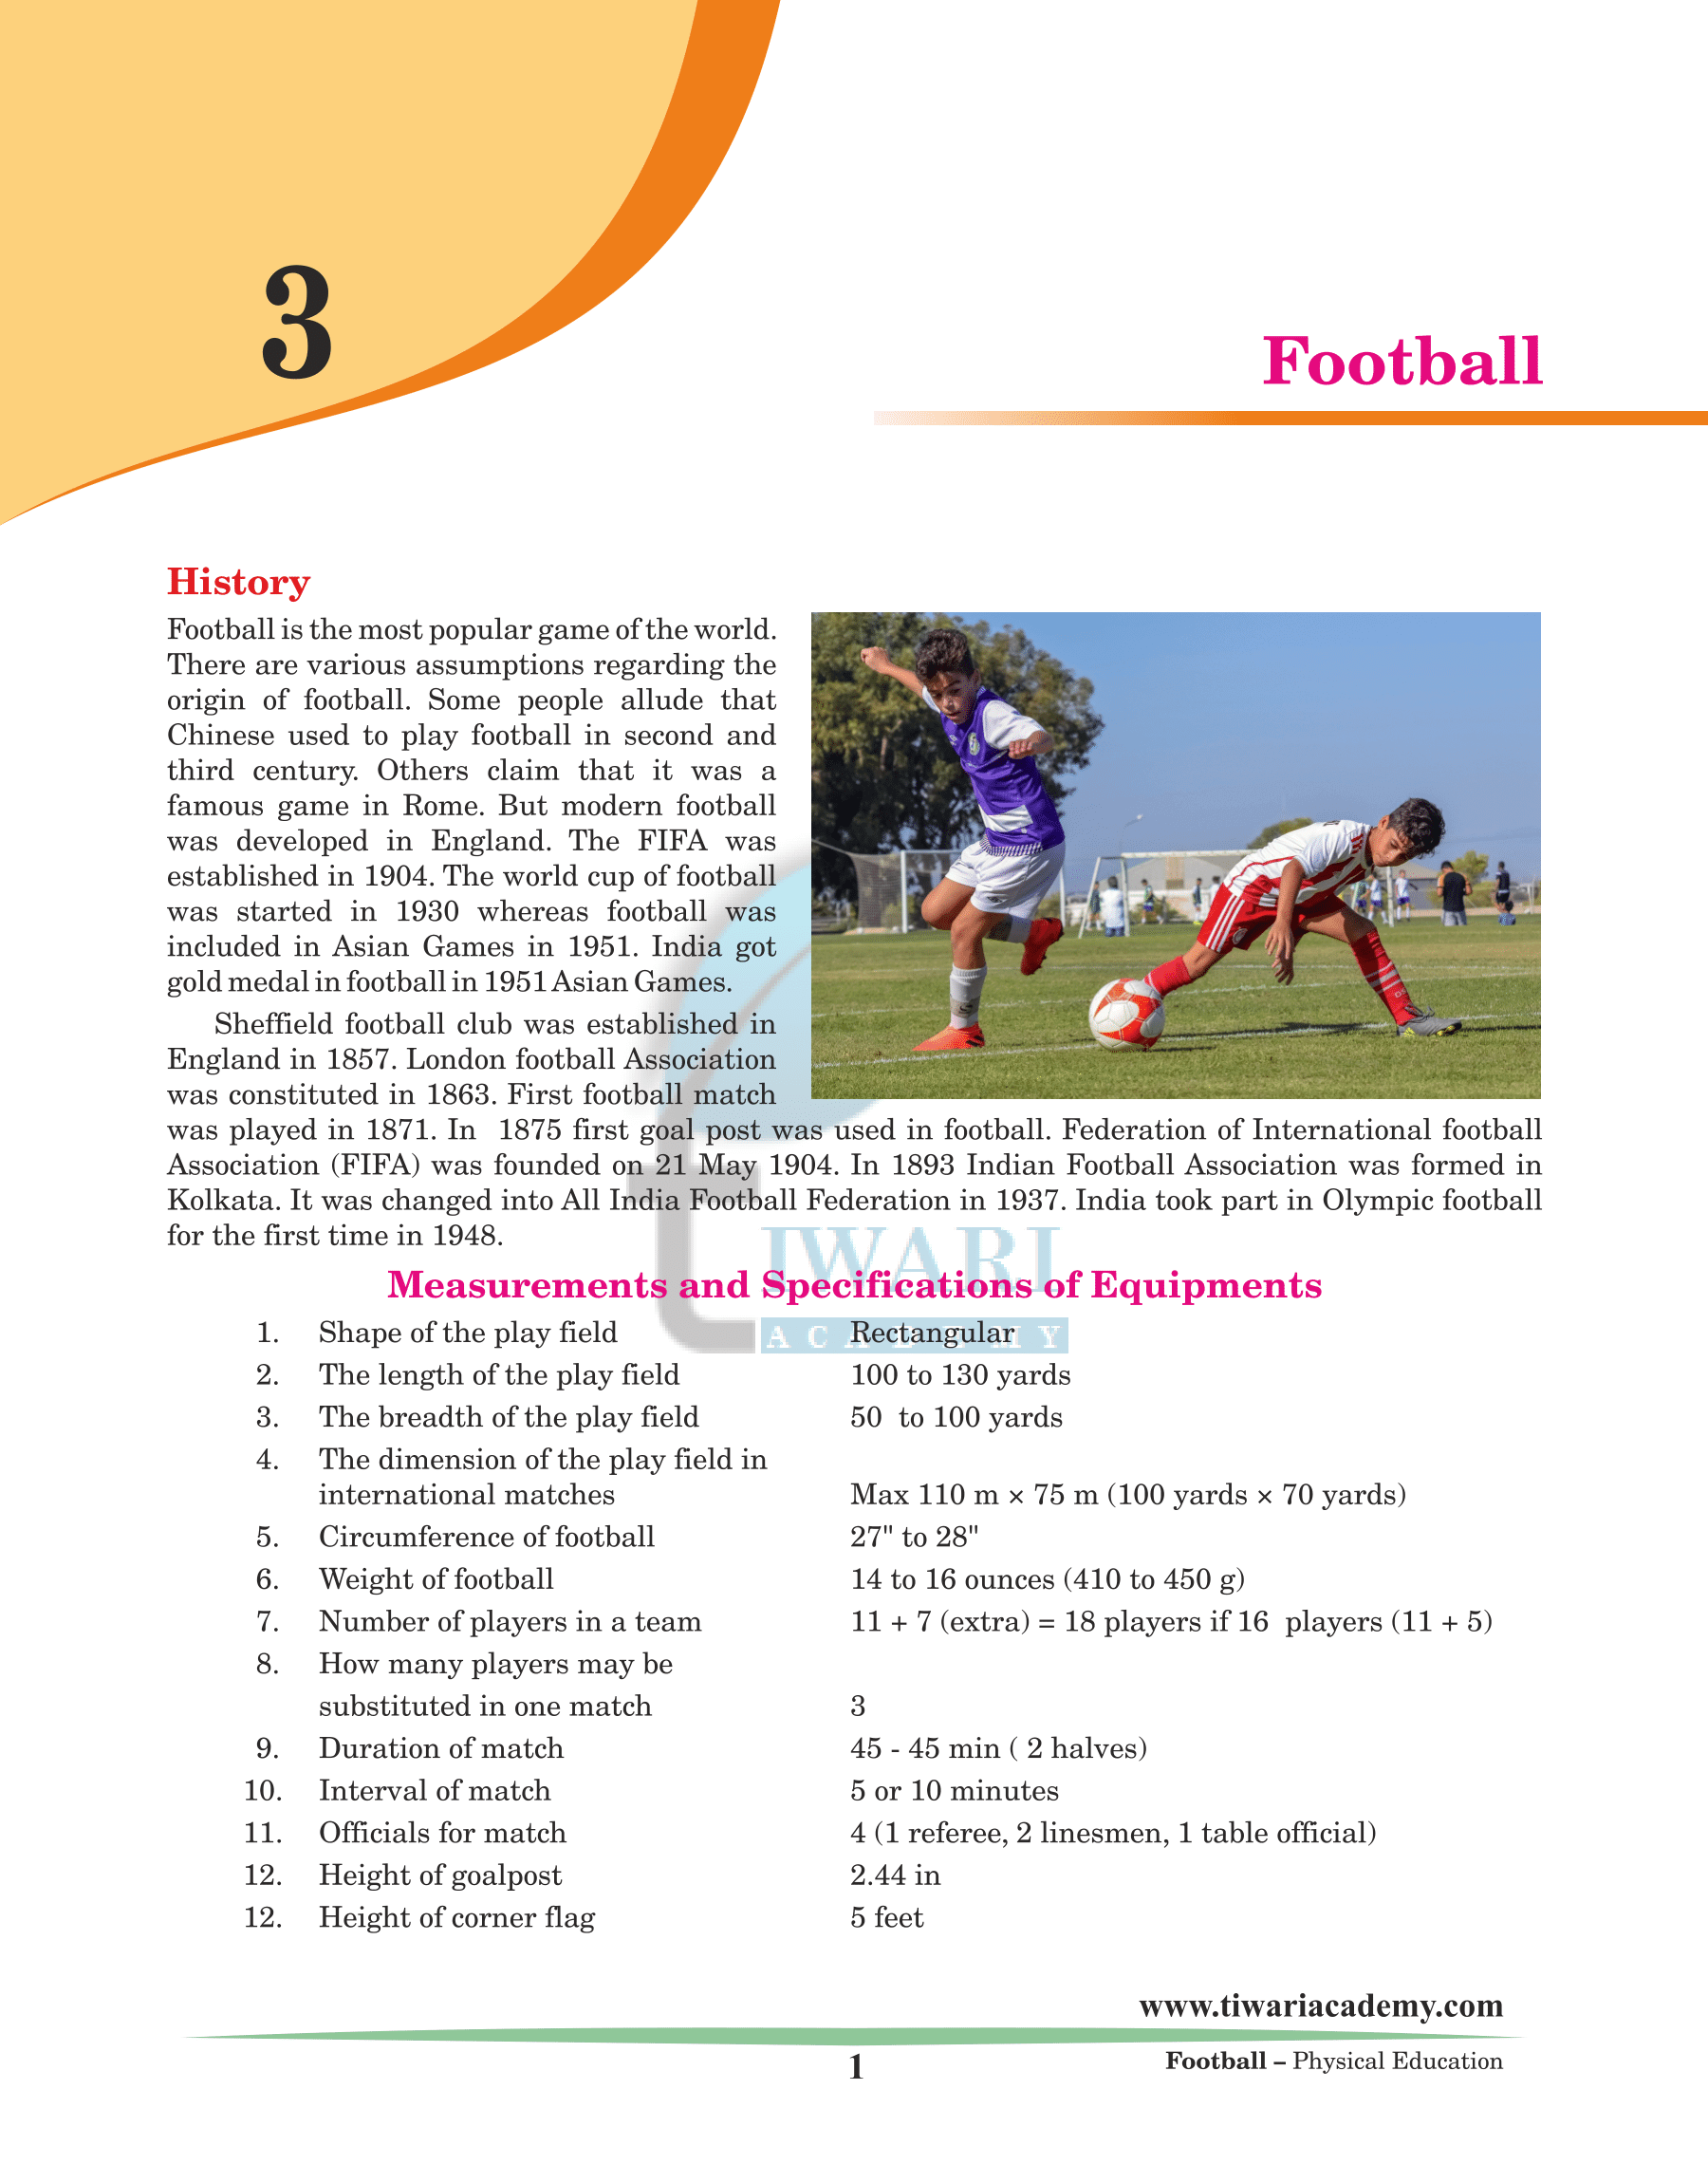 Football as an Indian Sports